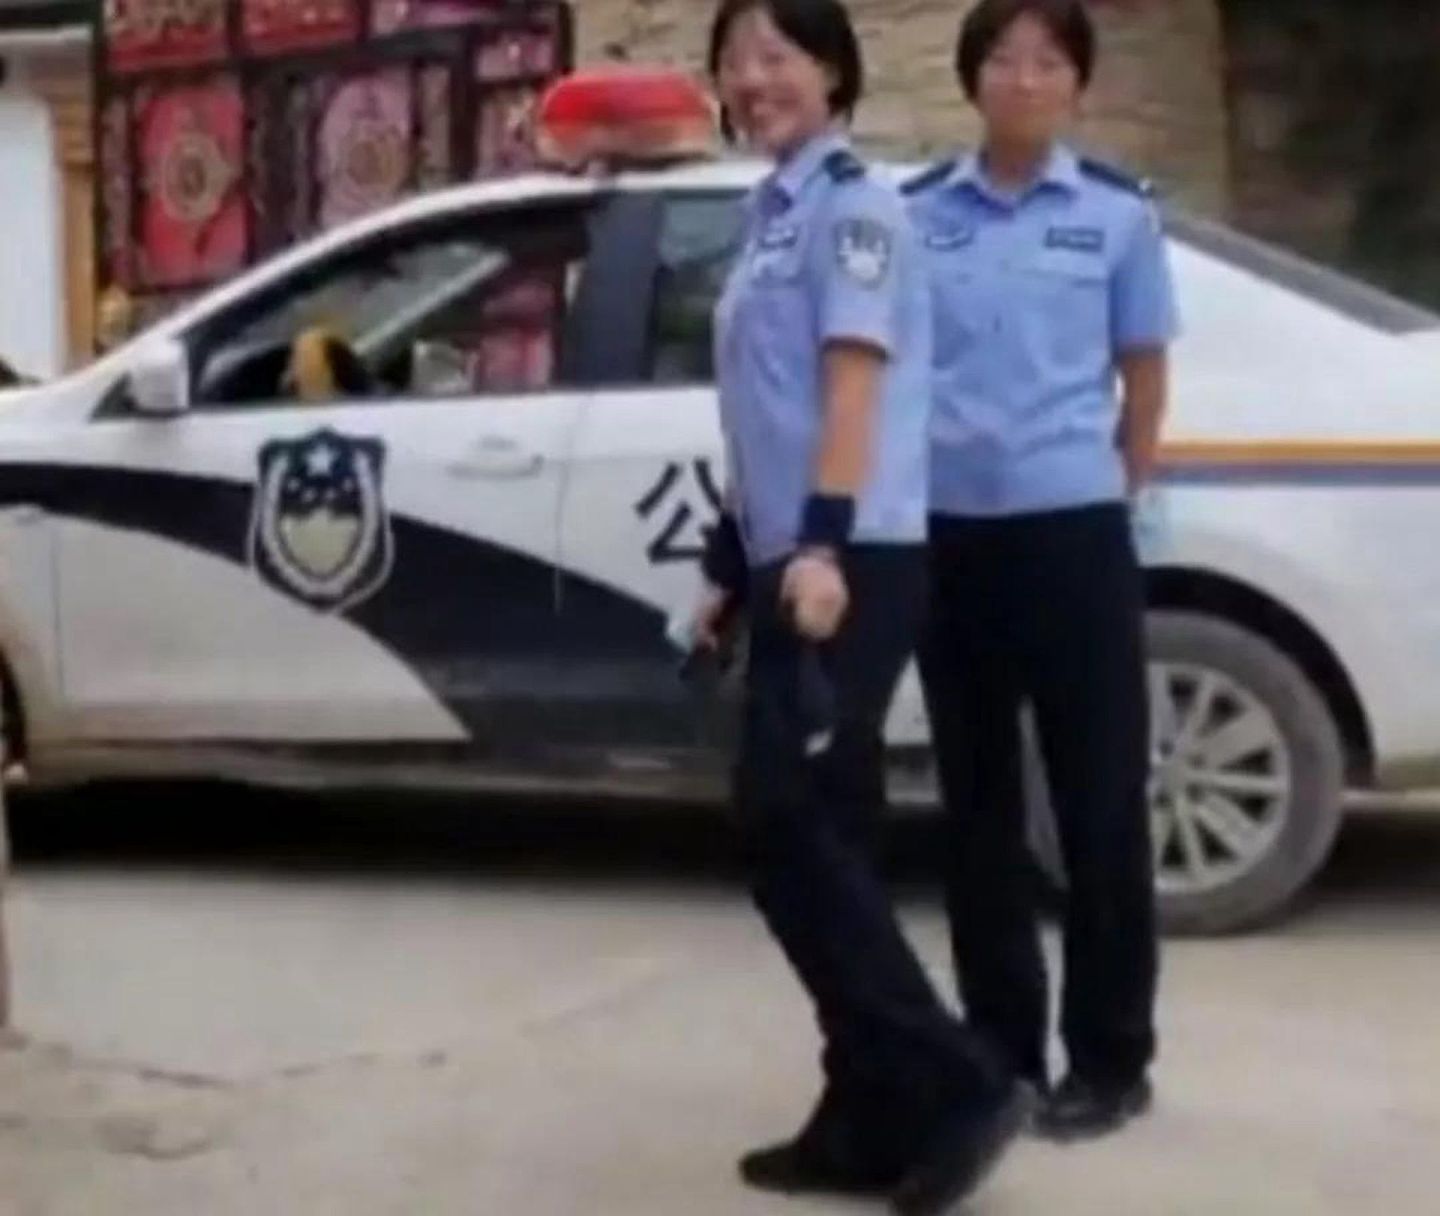 两名女警也是面带微笑。（Twitter@Emily O’Dell）